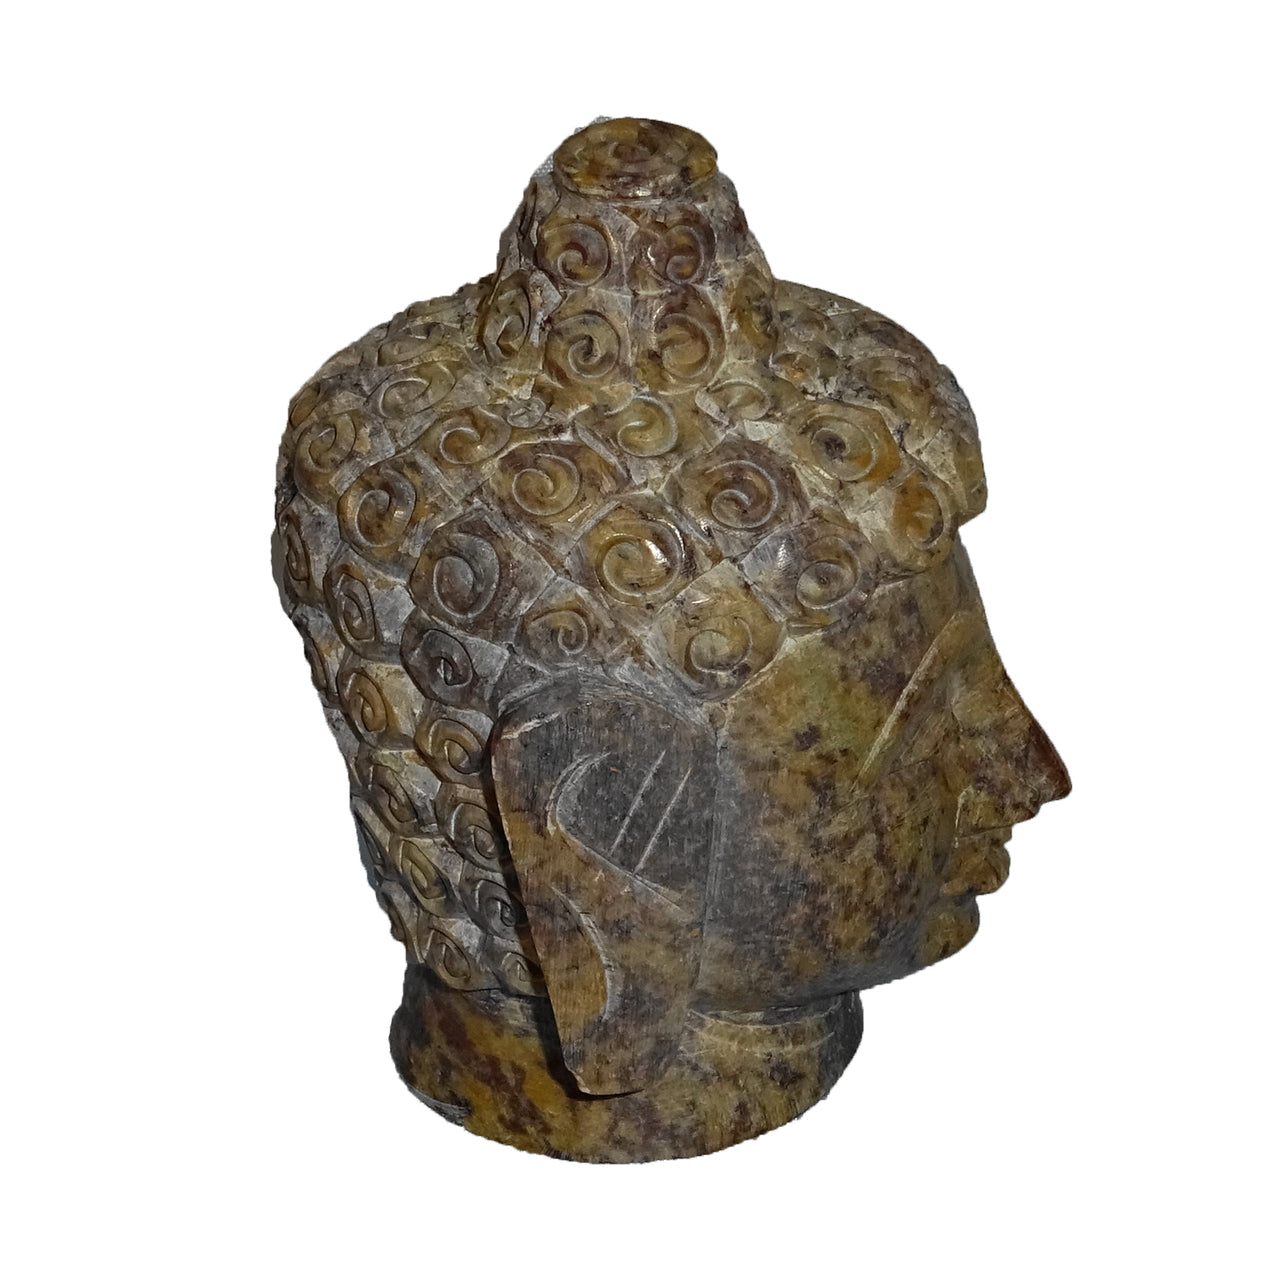 Fire Sale! Small Buddha Head Hand Carved Gorara Stone Sculpture